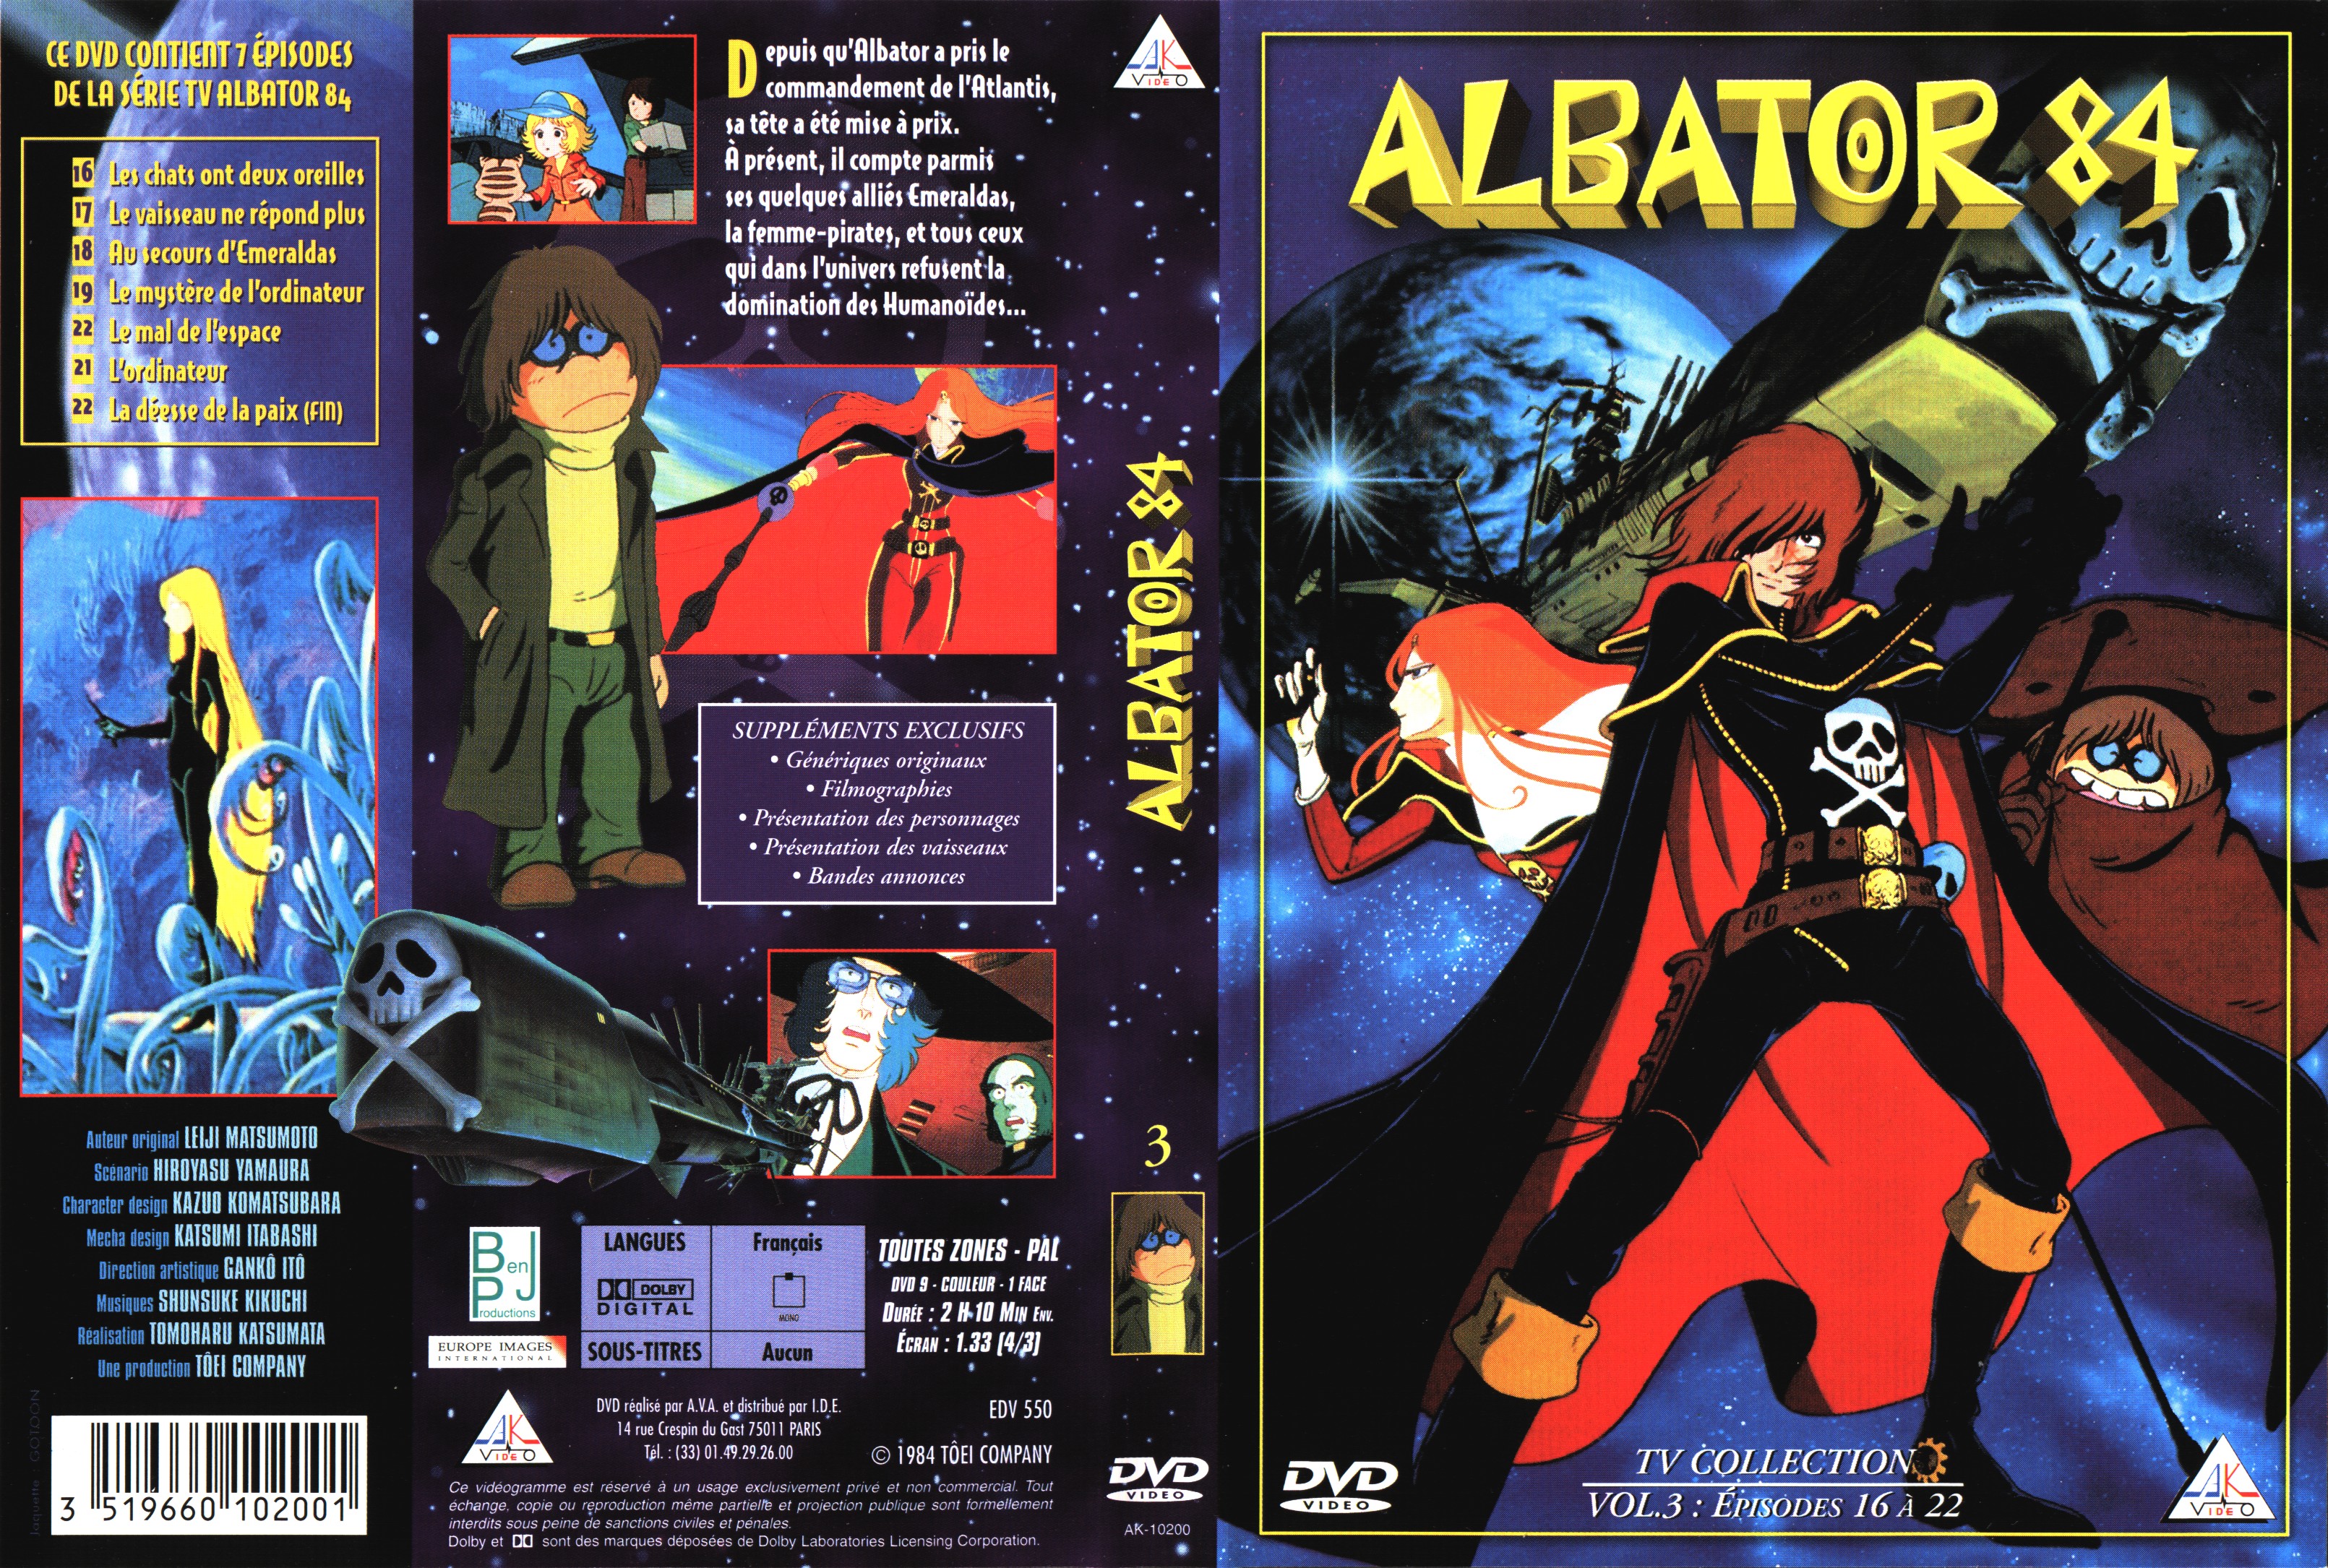 Jaquette DVD Albator 84 vol 3